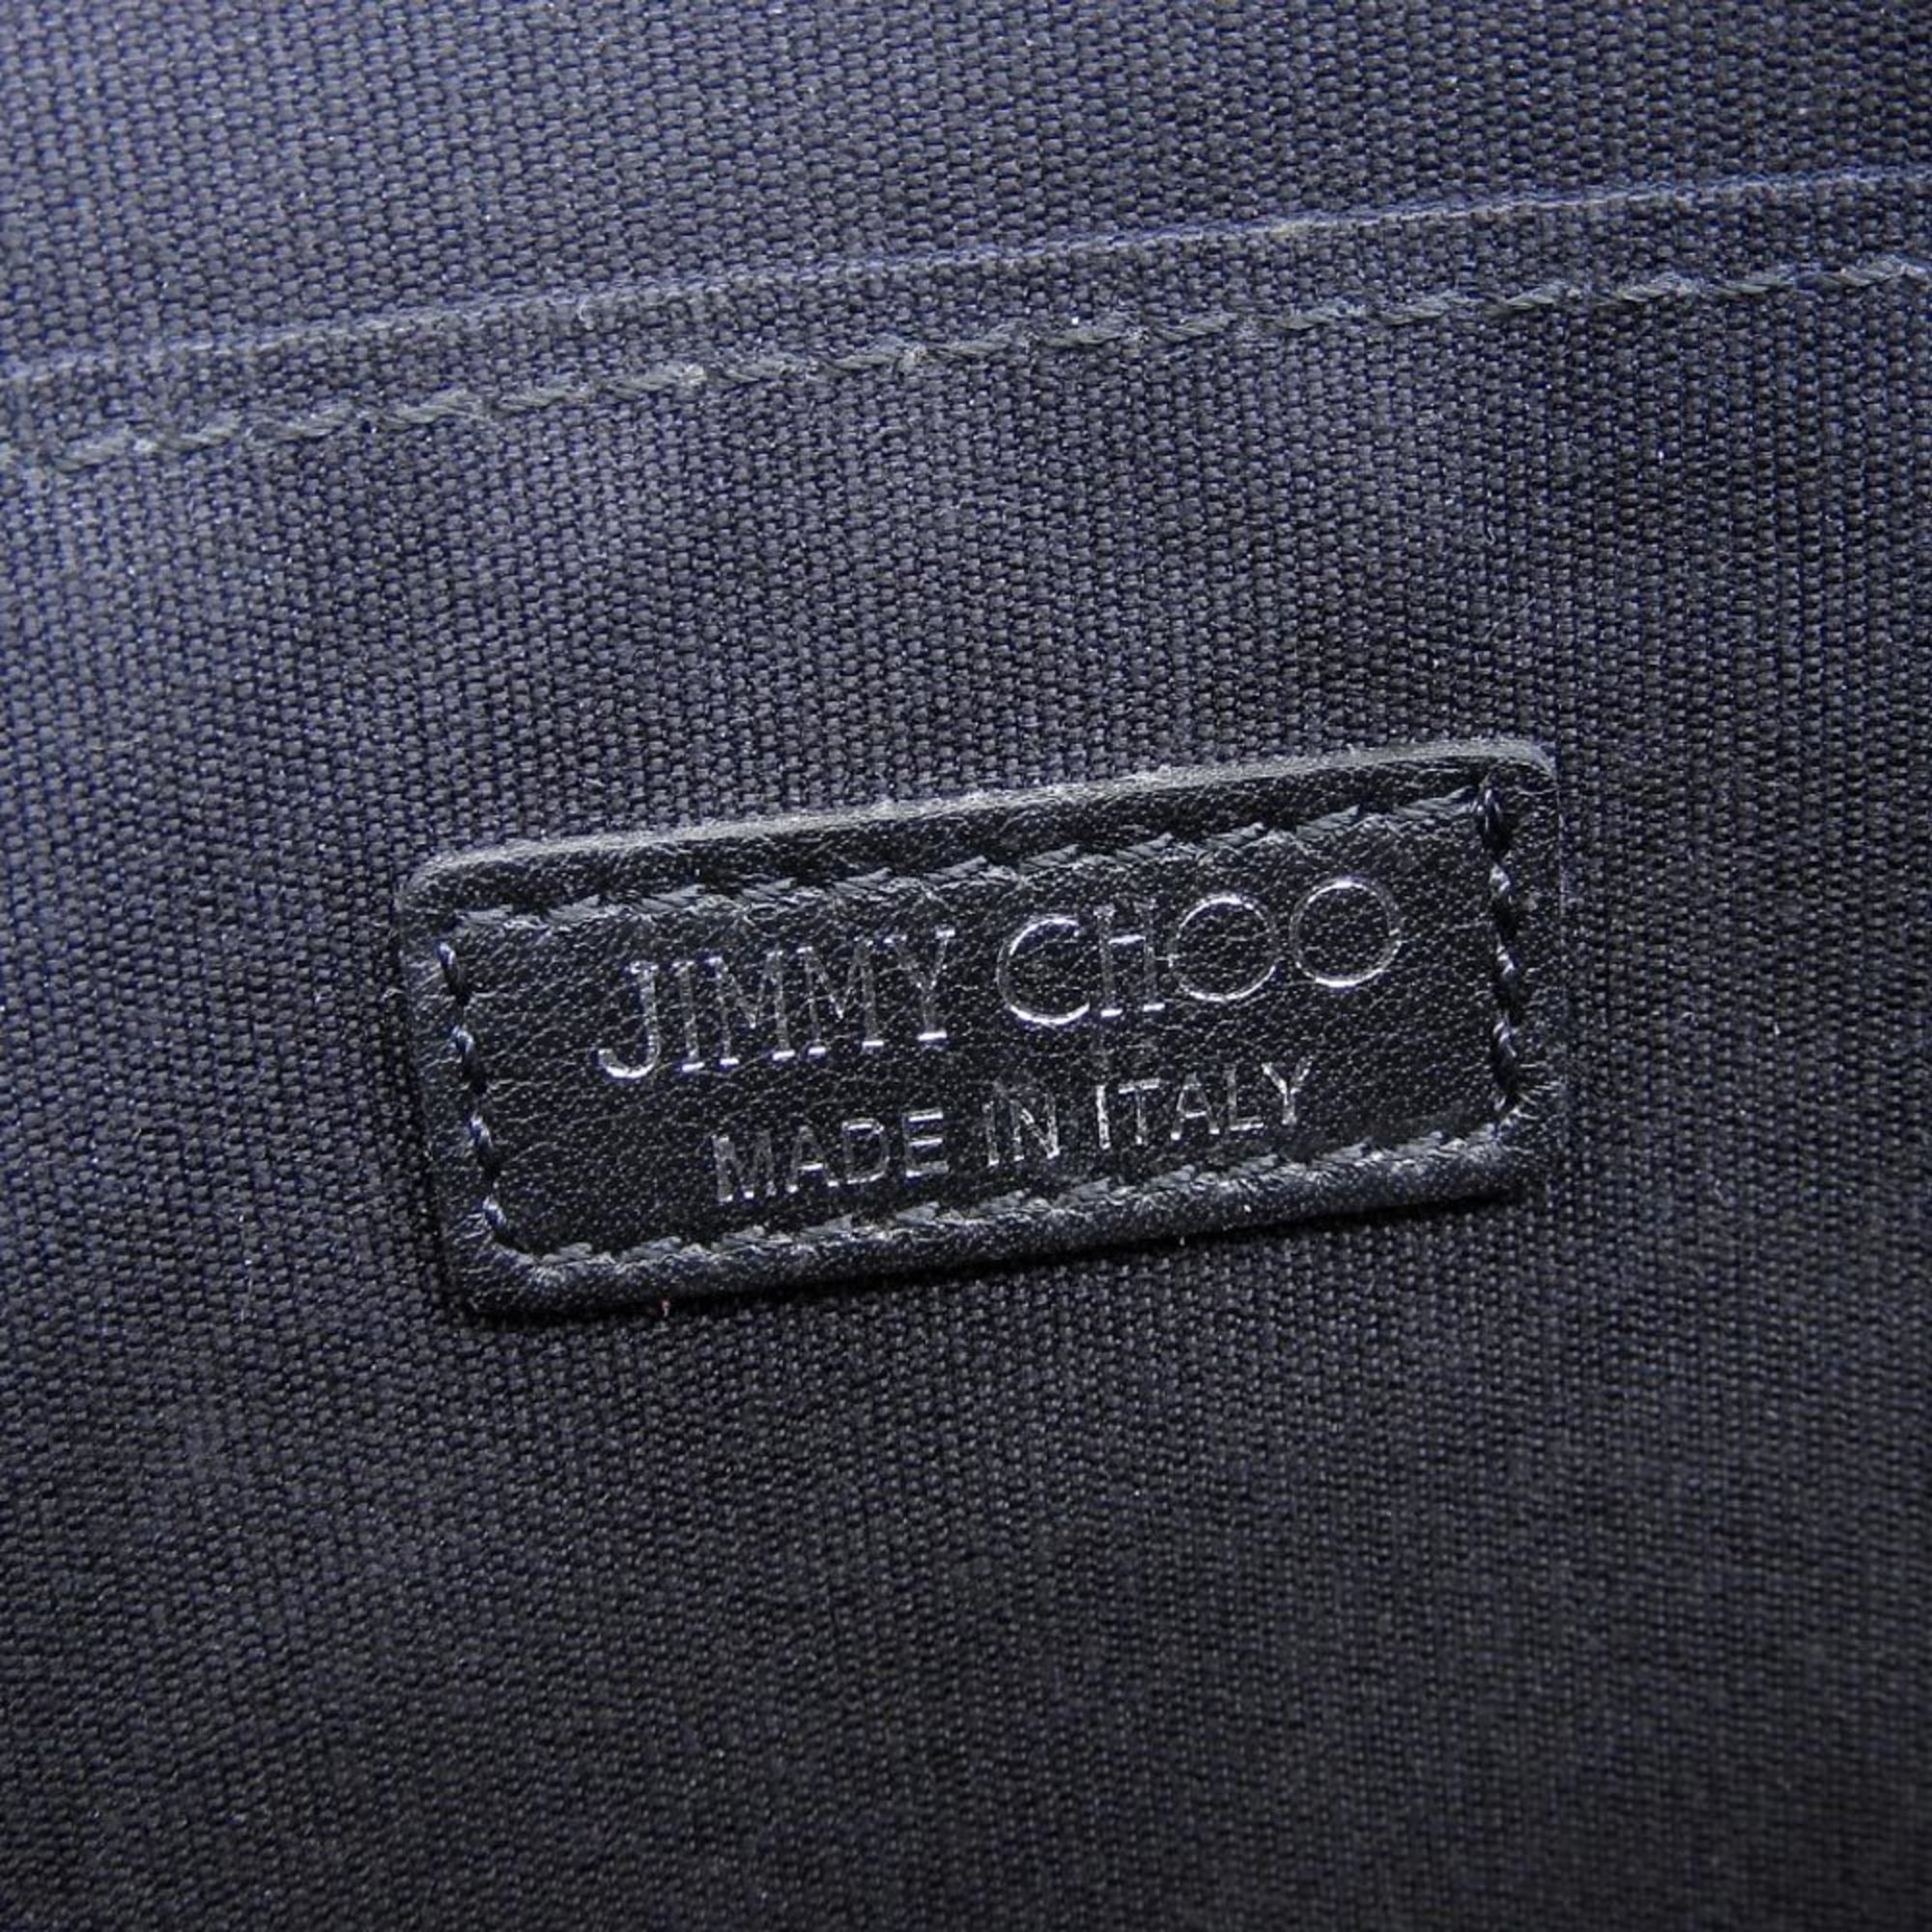 Jimmy Choo JIMMY CHOO Philippa Star Studs Clutch Bag Second Leather Black